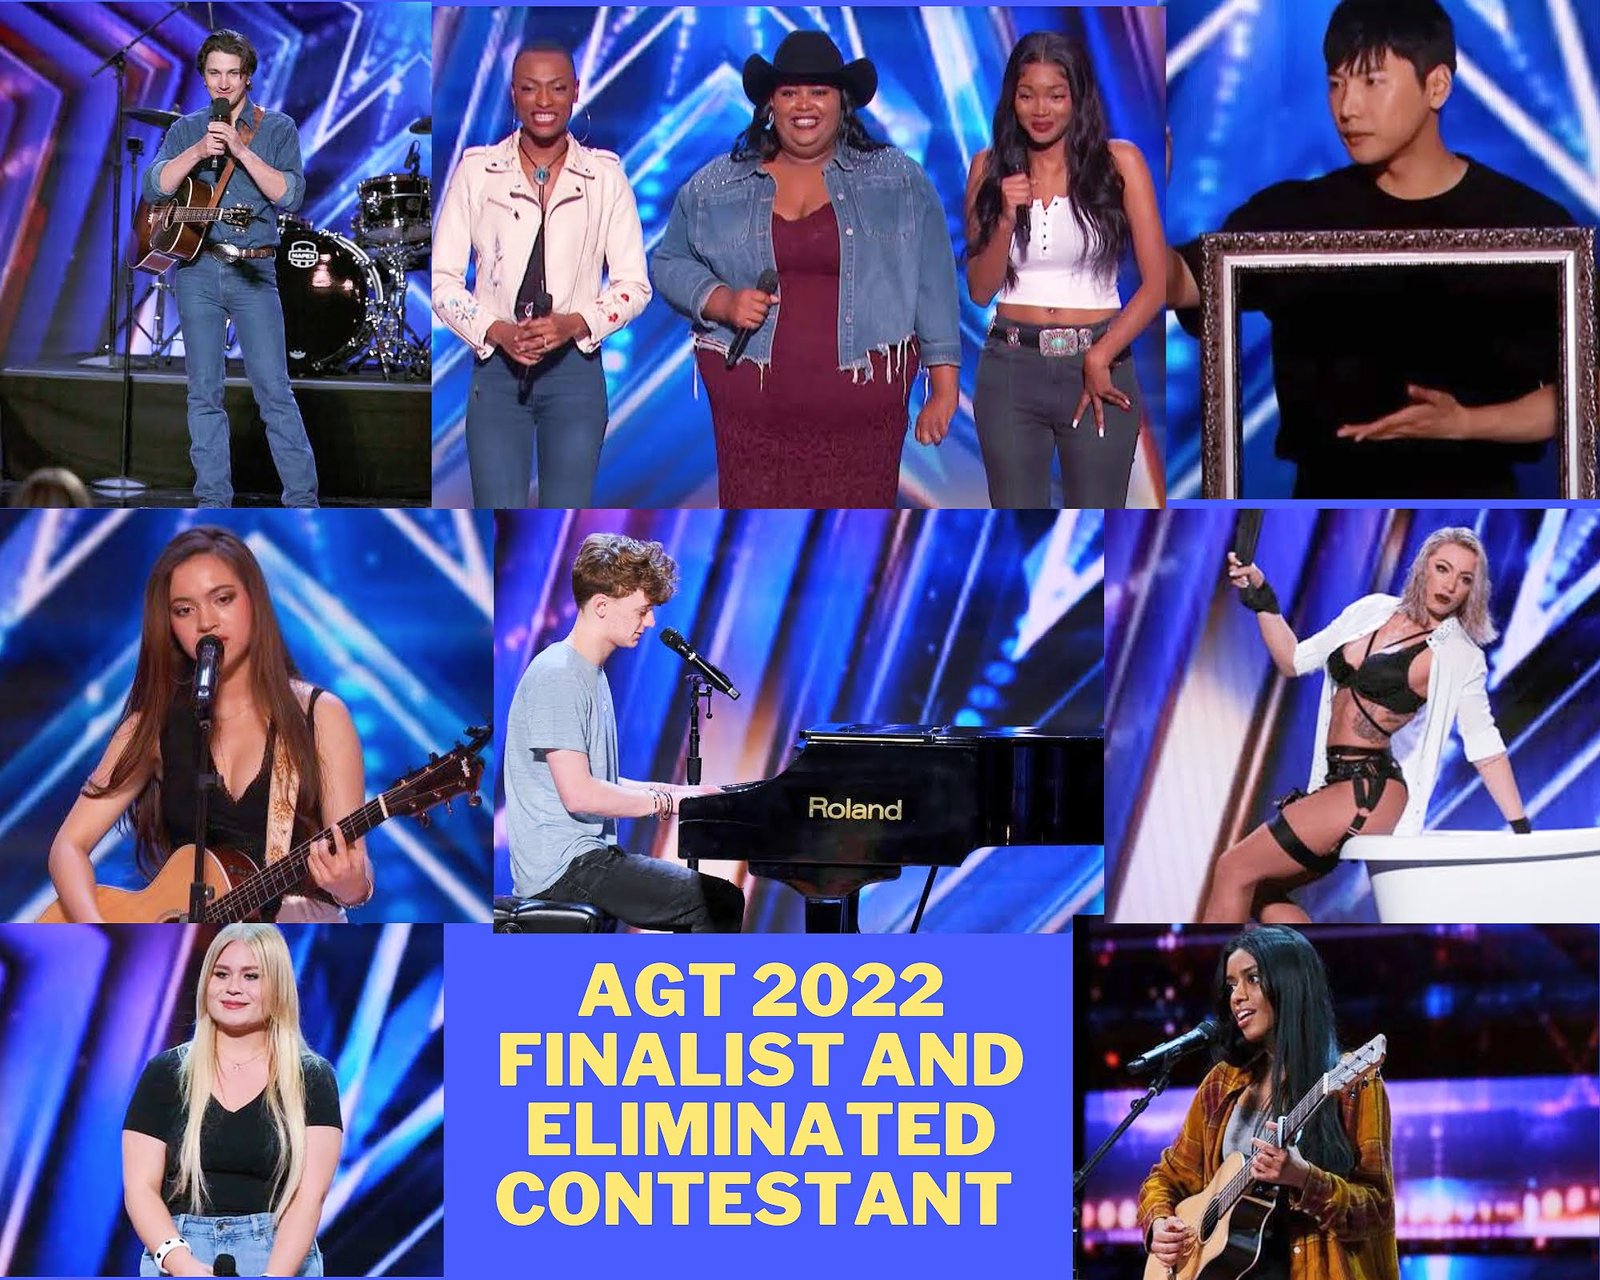 AGT 2022 FINALIST America's Got Talent 17 Eliminated Contestants